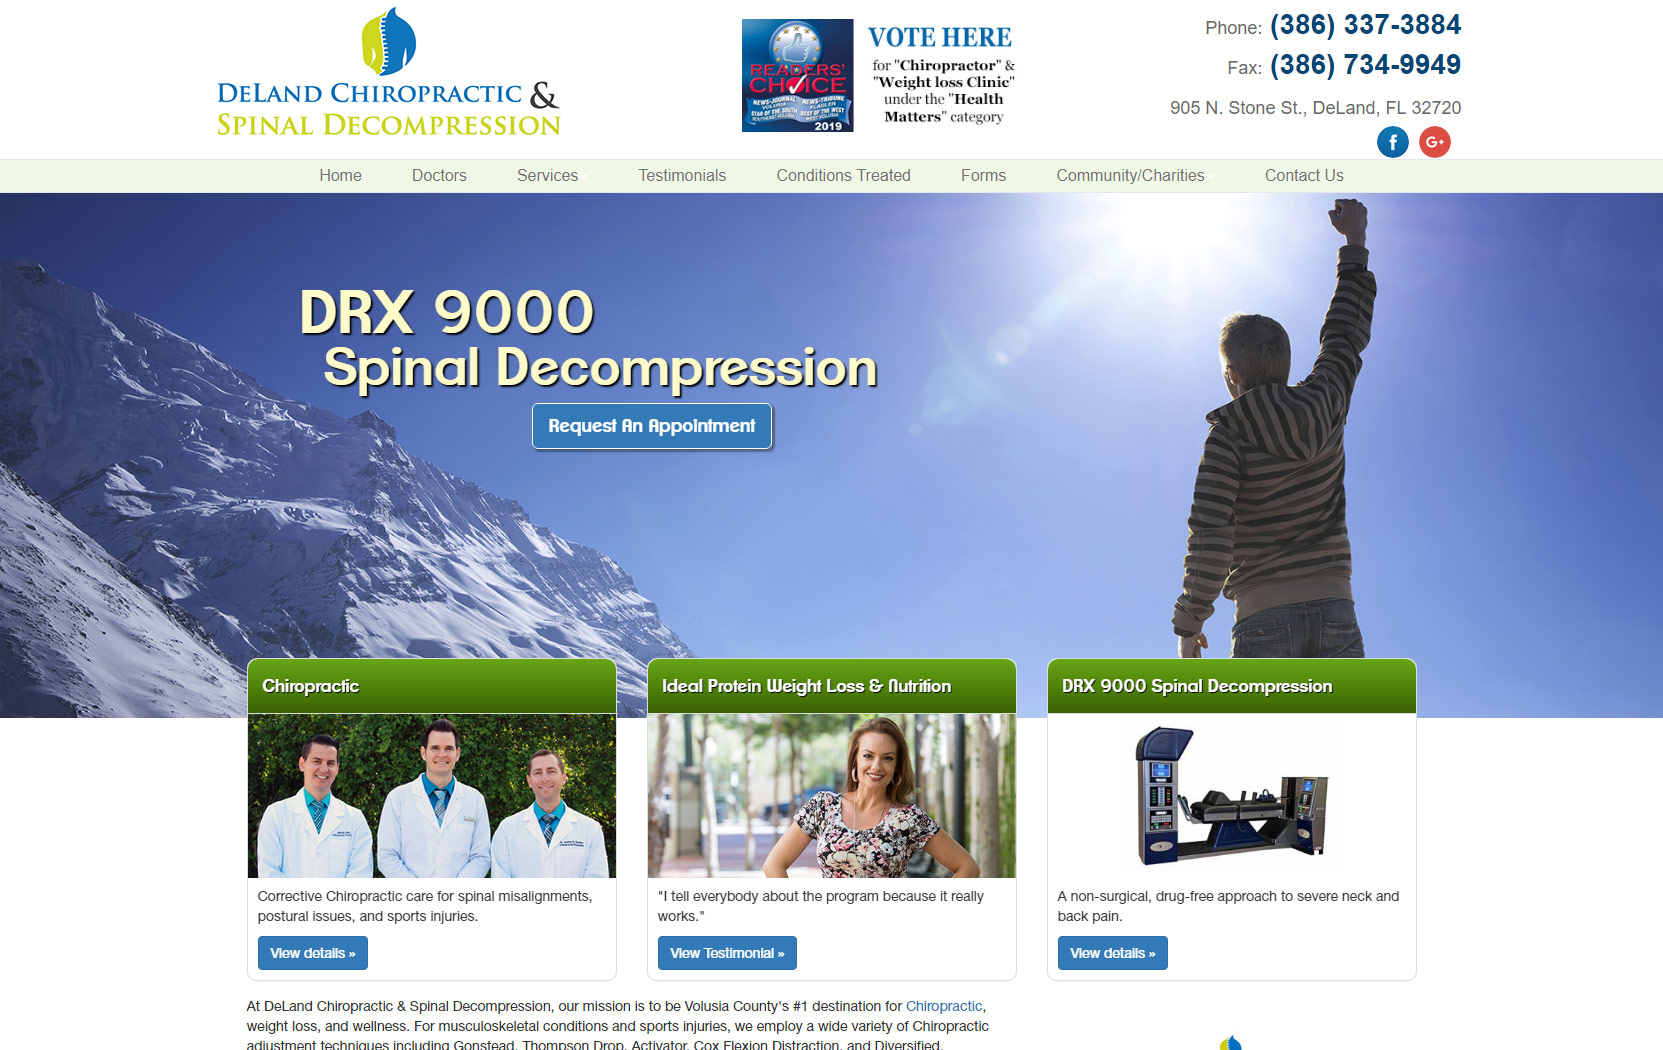 DeLand Chiropractic & Spinal Decompression